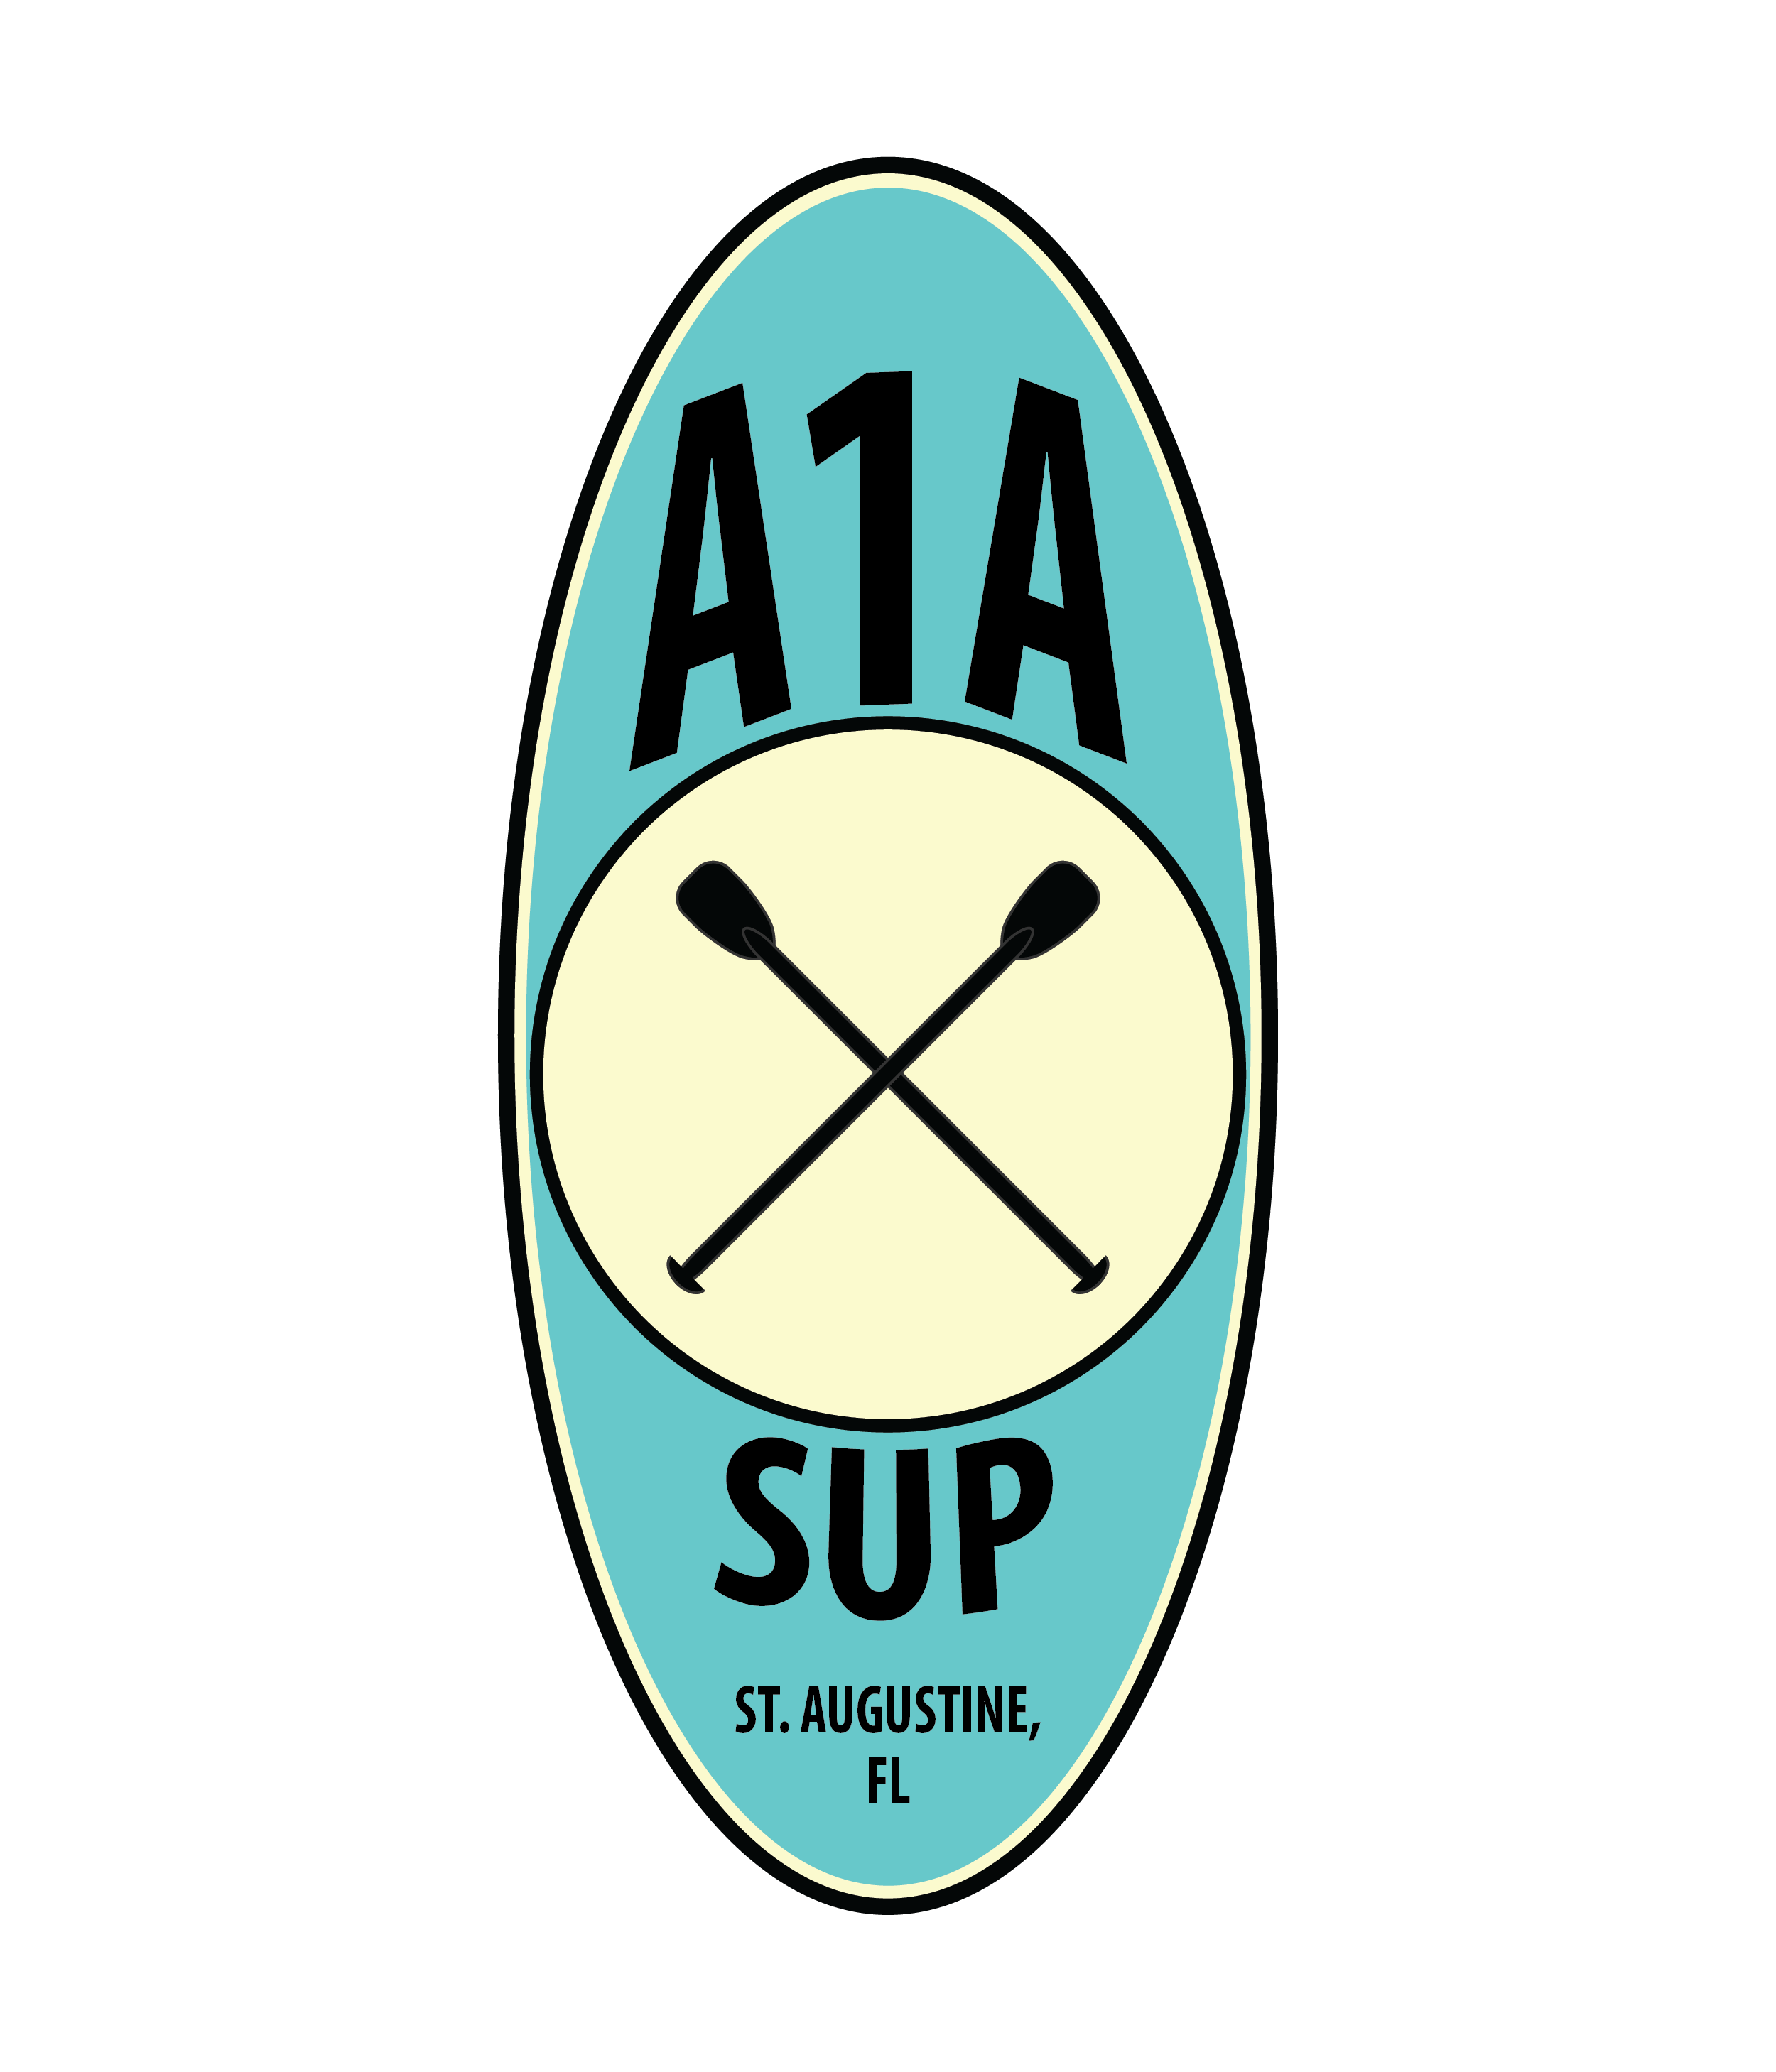 A1A SUP